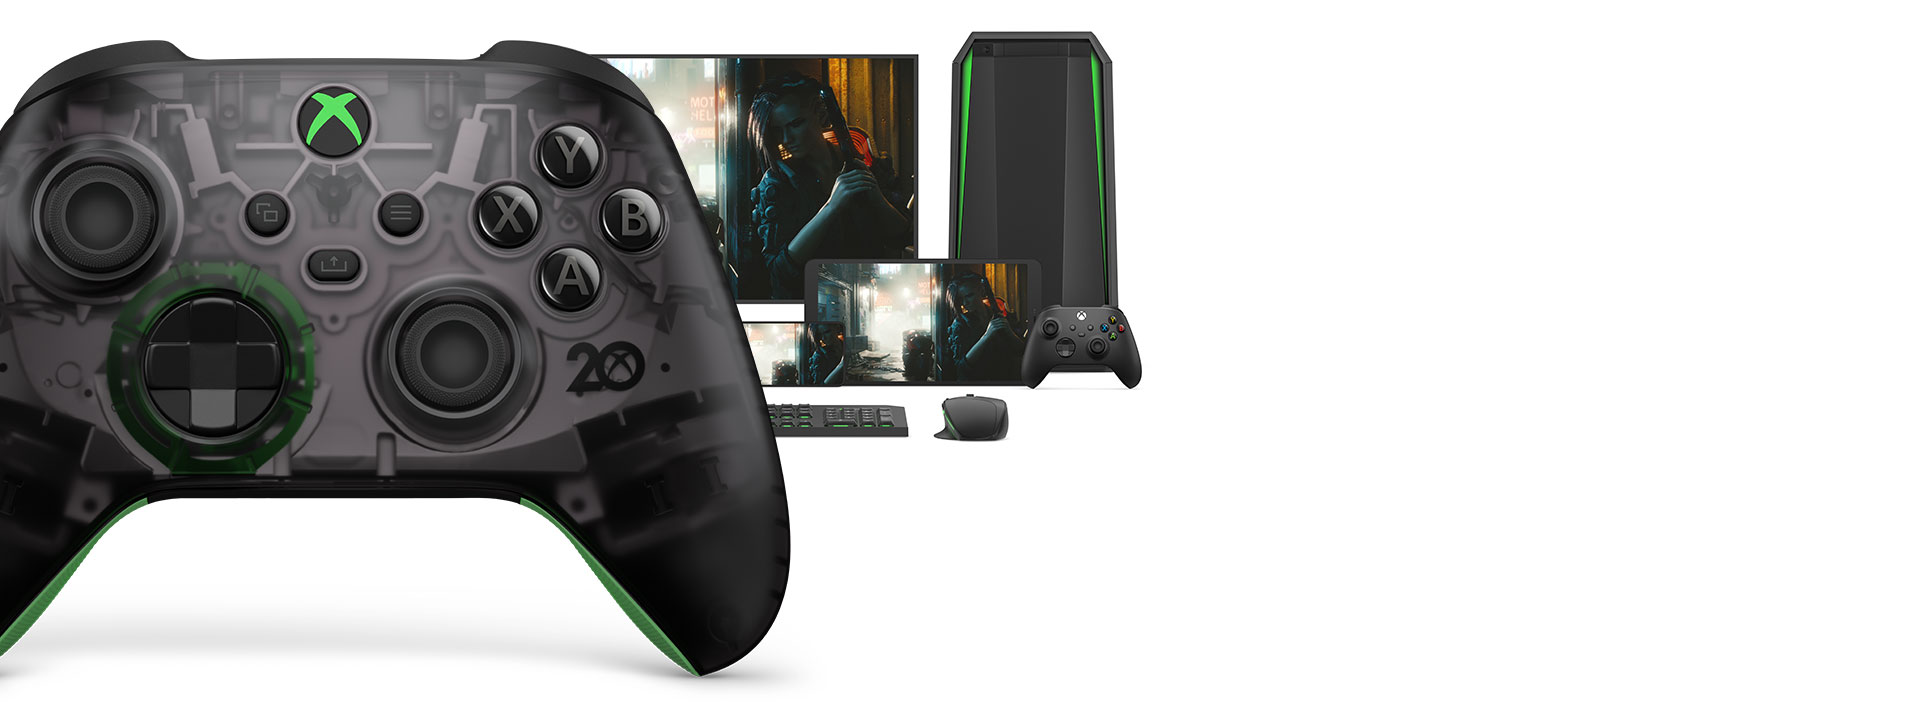 Xbox ワイヤレス コントローラー – 20 周年スペシャル エディション | Xbox